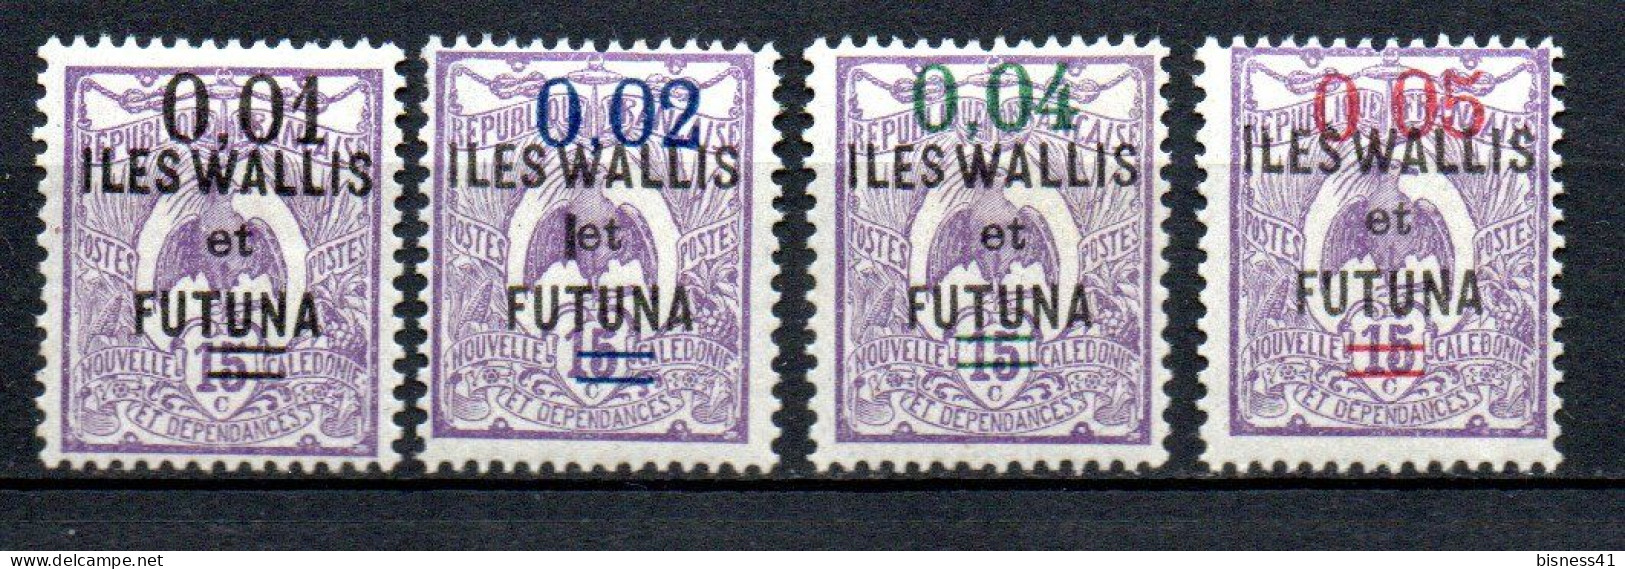 Col33 Colonie Wallis & Futuna N° 26 à 29 Neuf X MH Cote : 4,00€ - Ongebruikt